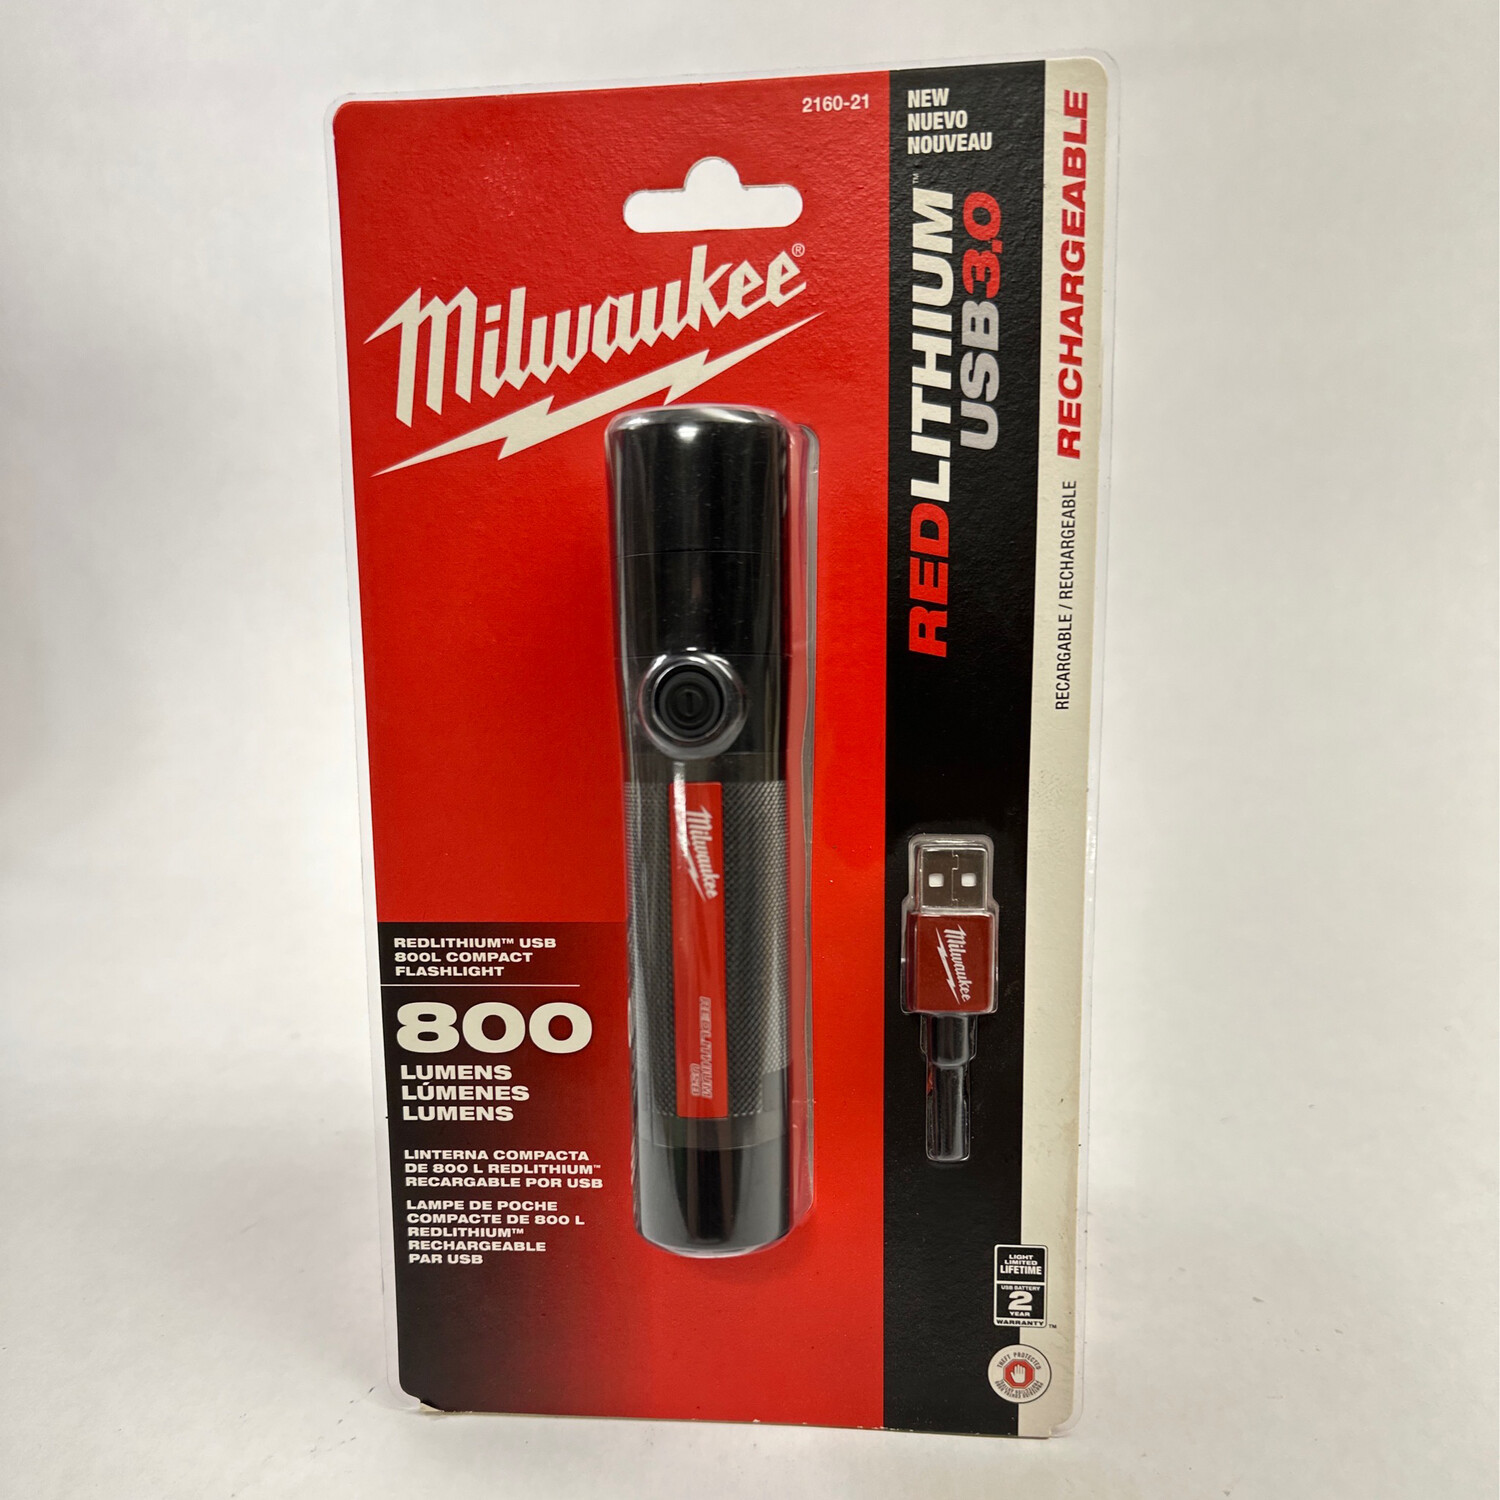 Milwaukee RedLithium USB 800L Compact Flashlight, 2160-21